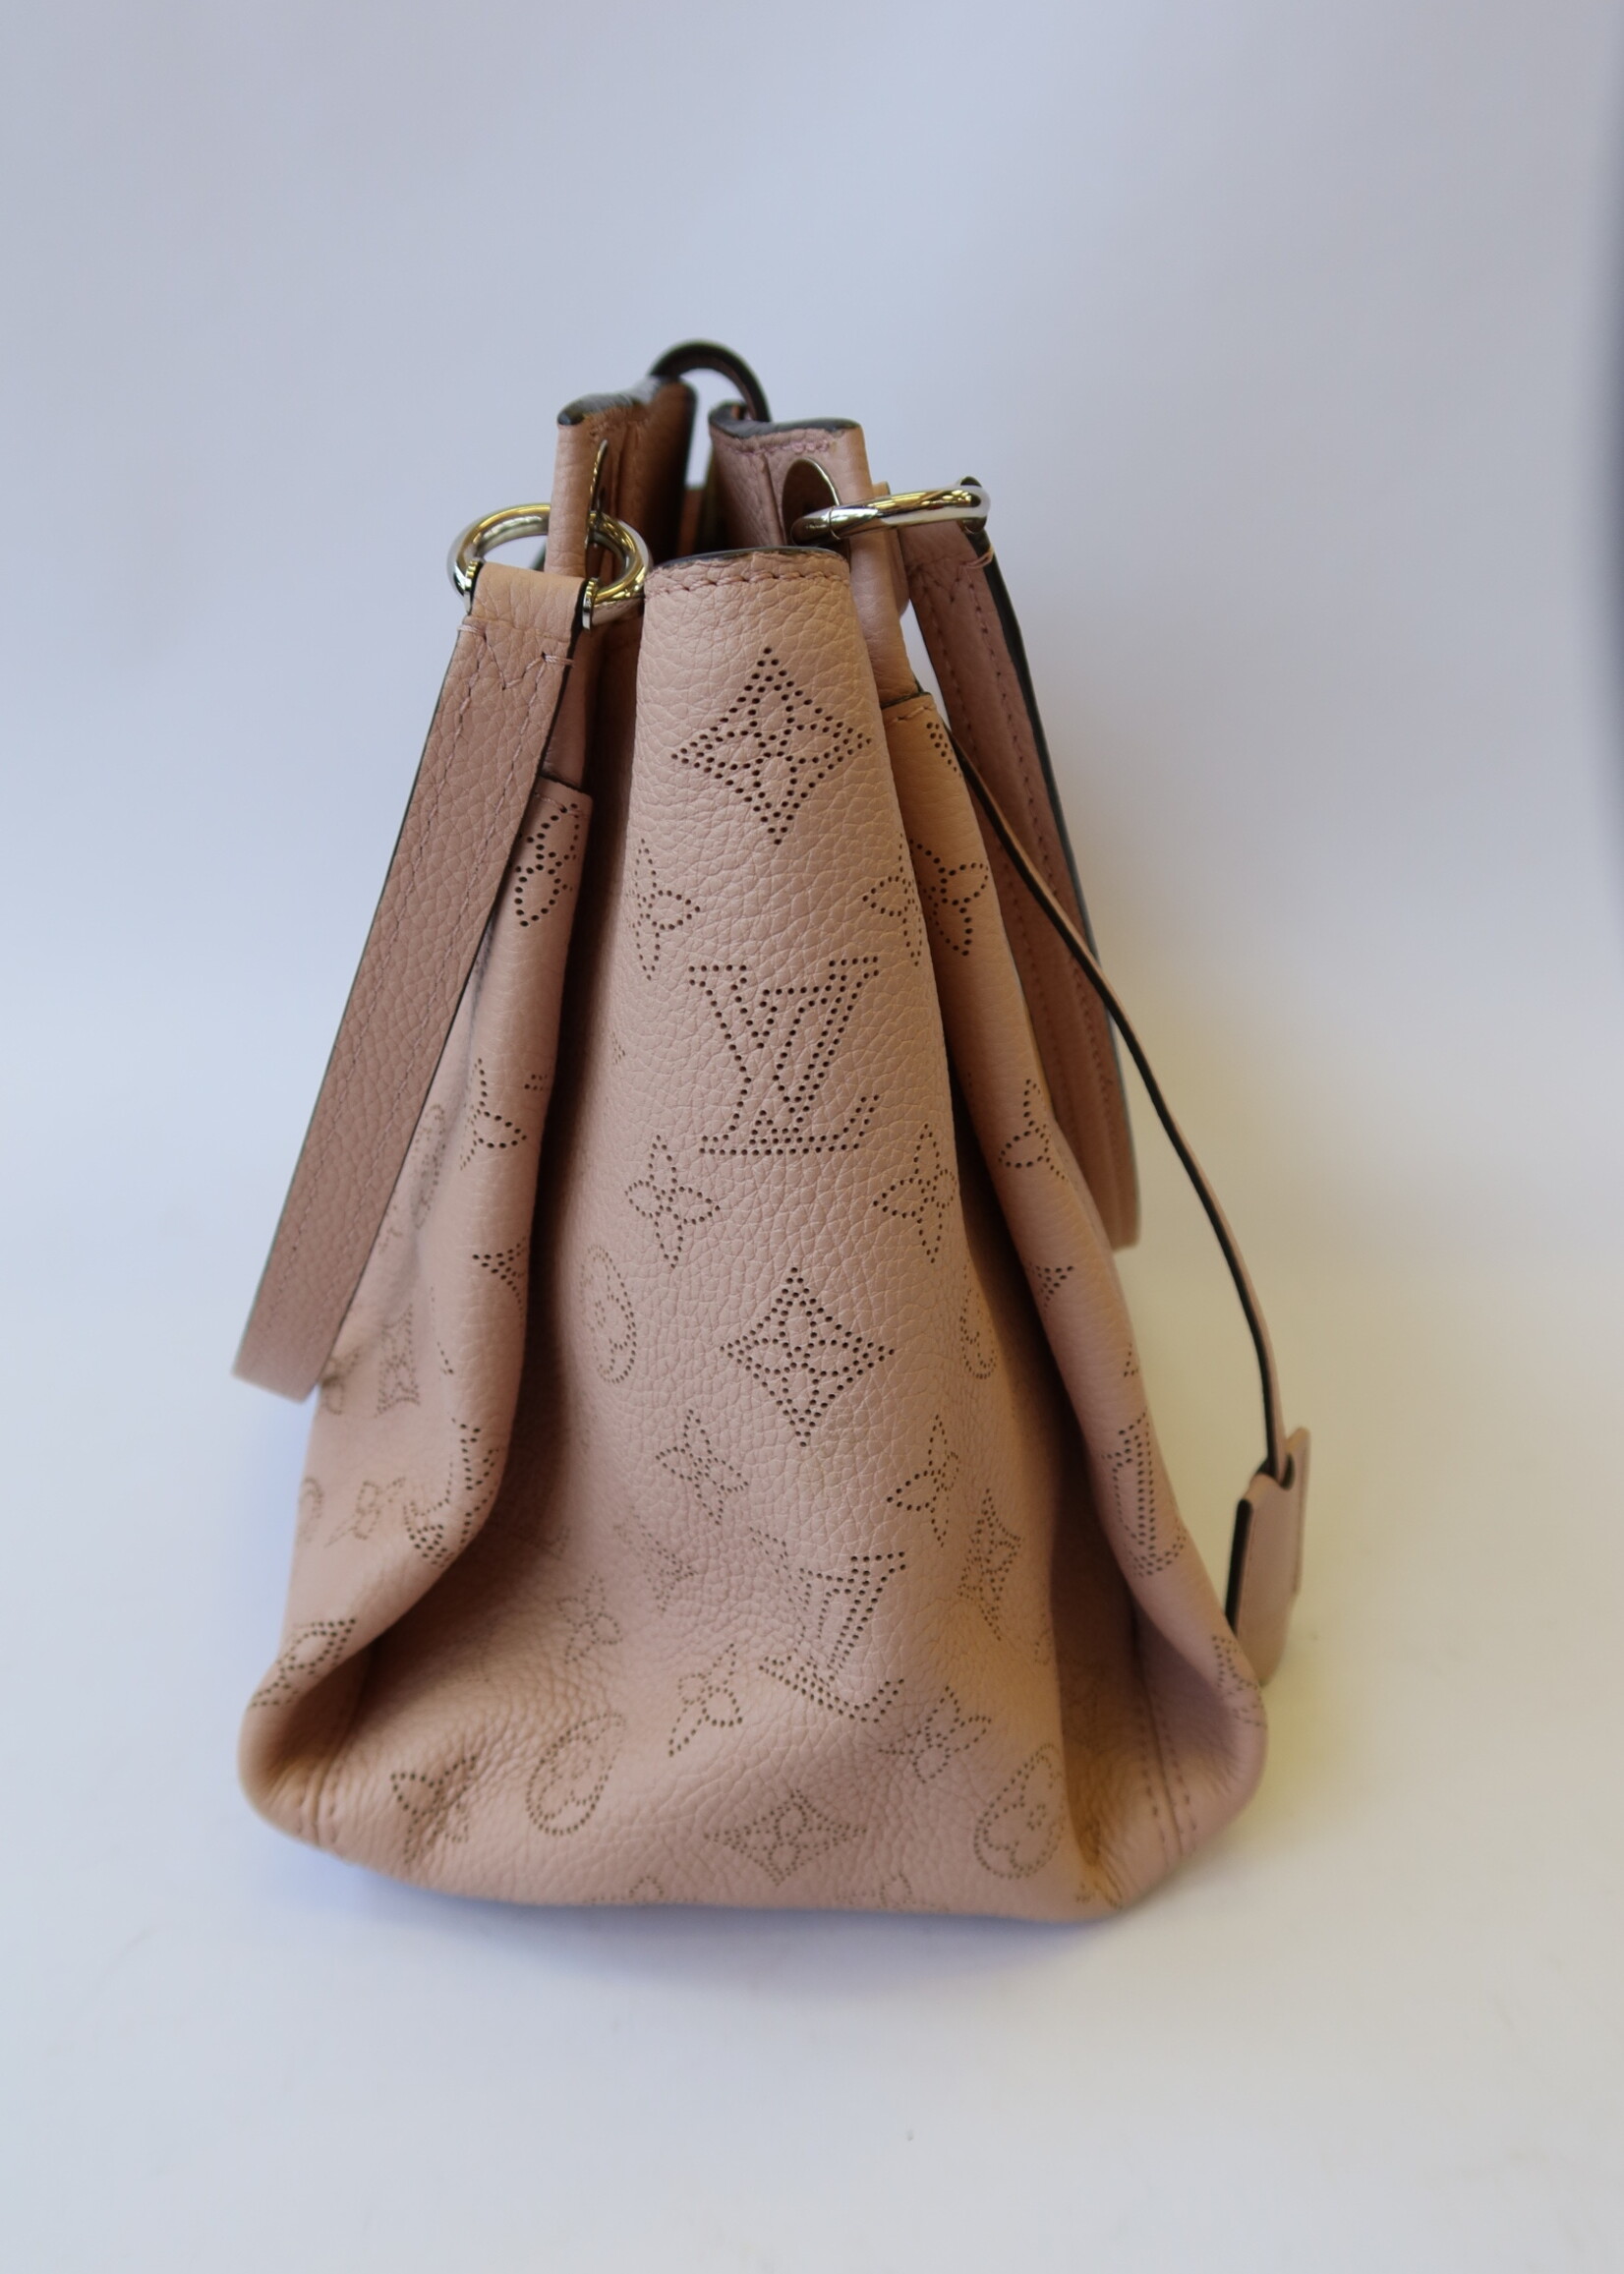 Louis Vuitton Mahina Sevres Bag